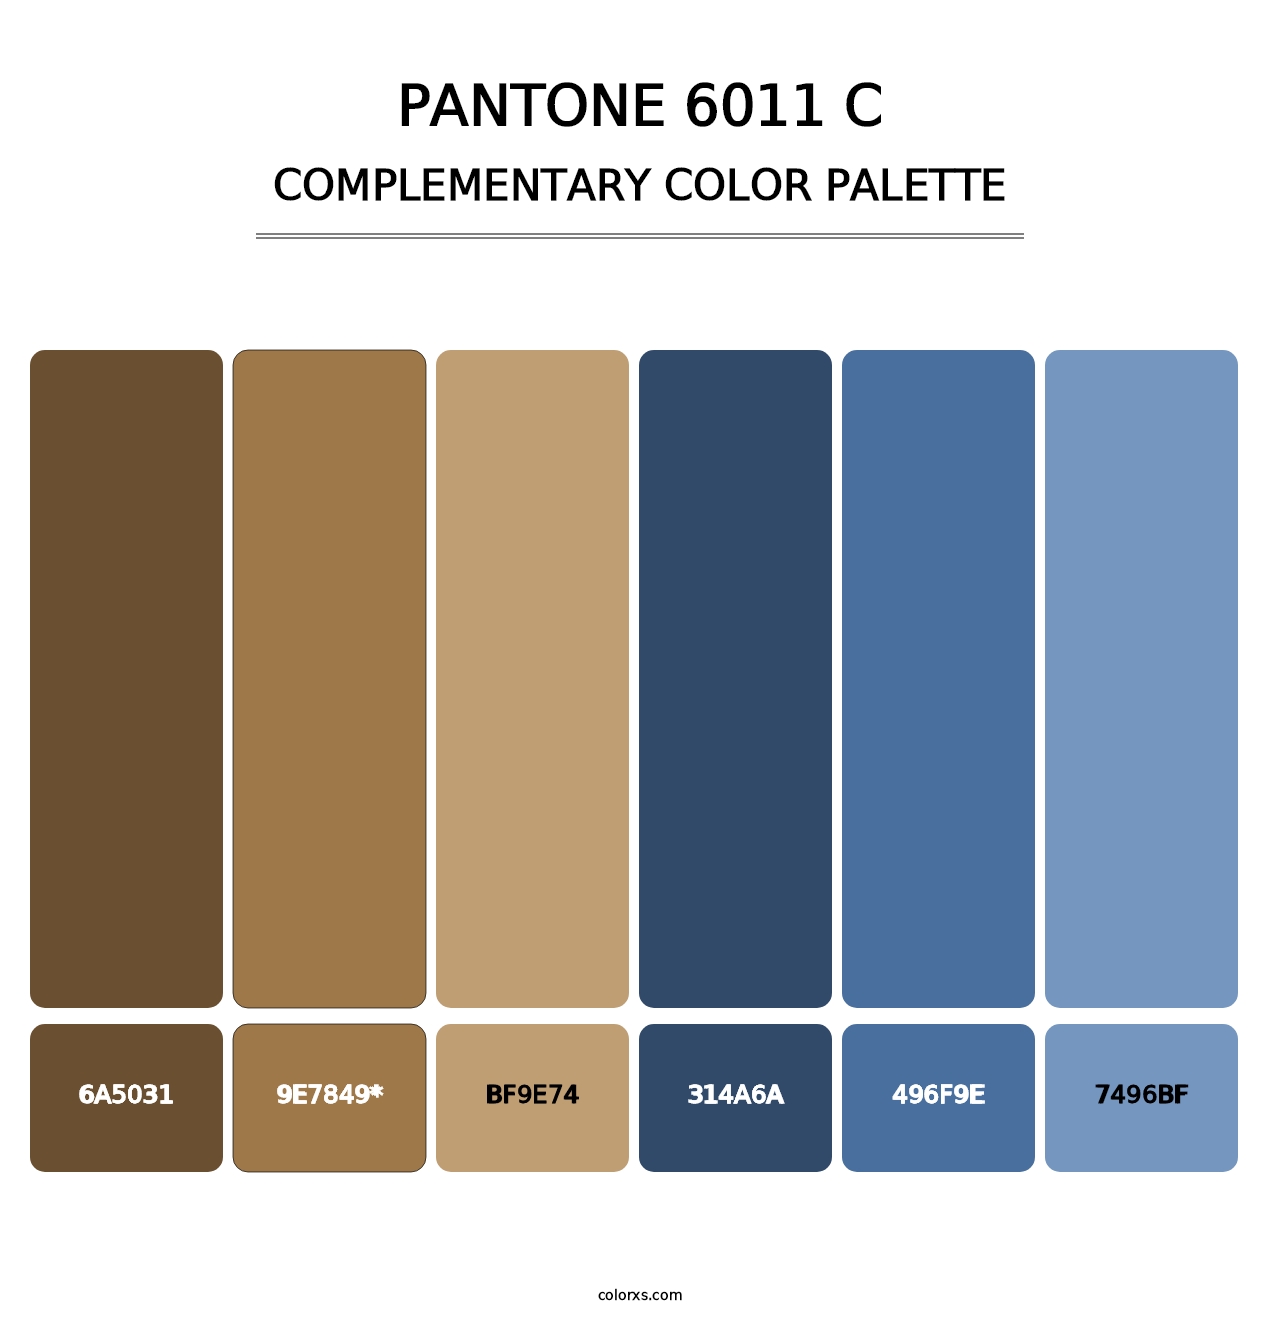 PANTONE 6011 C - Complementary Color Palette